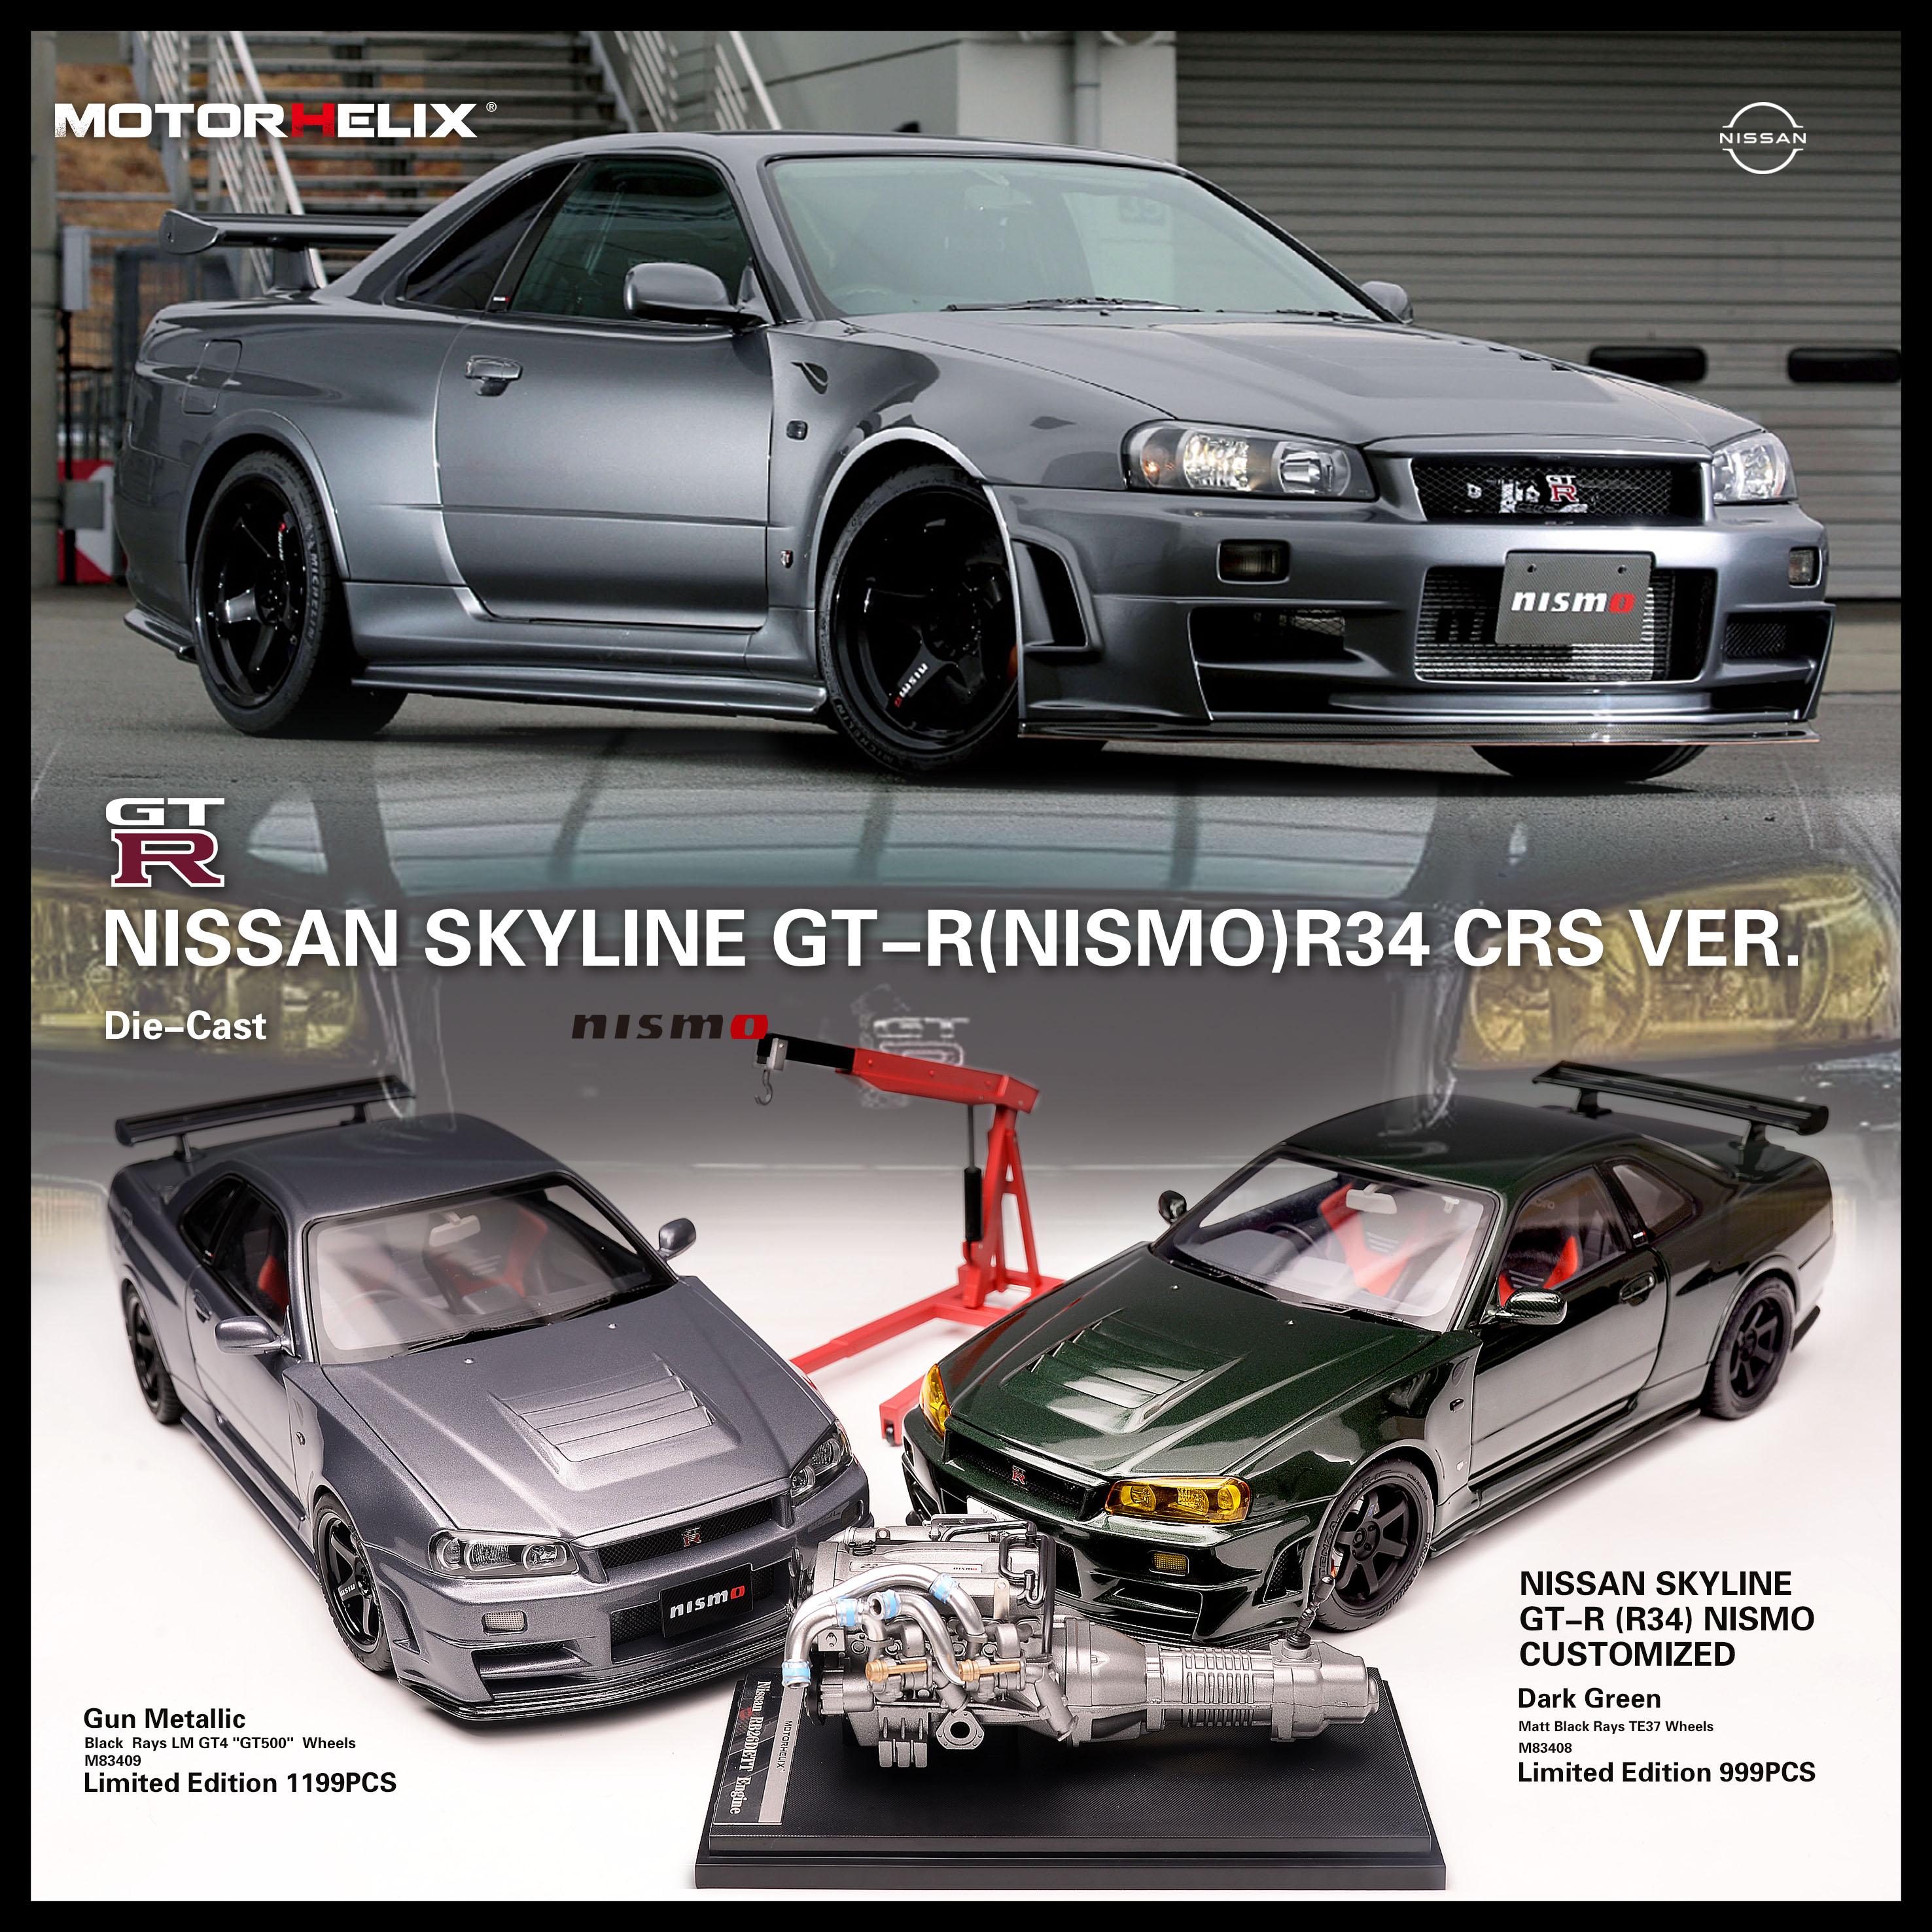 1:18 Motorhelix Nissan Skyline GT-R (R34) NISMO CRS Version gun metallic + engine M83409